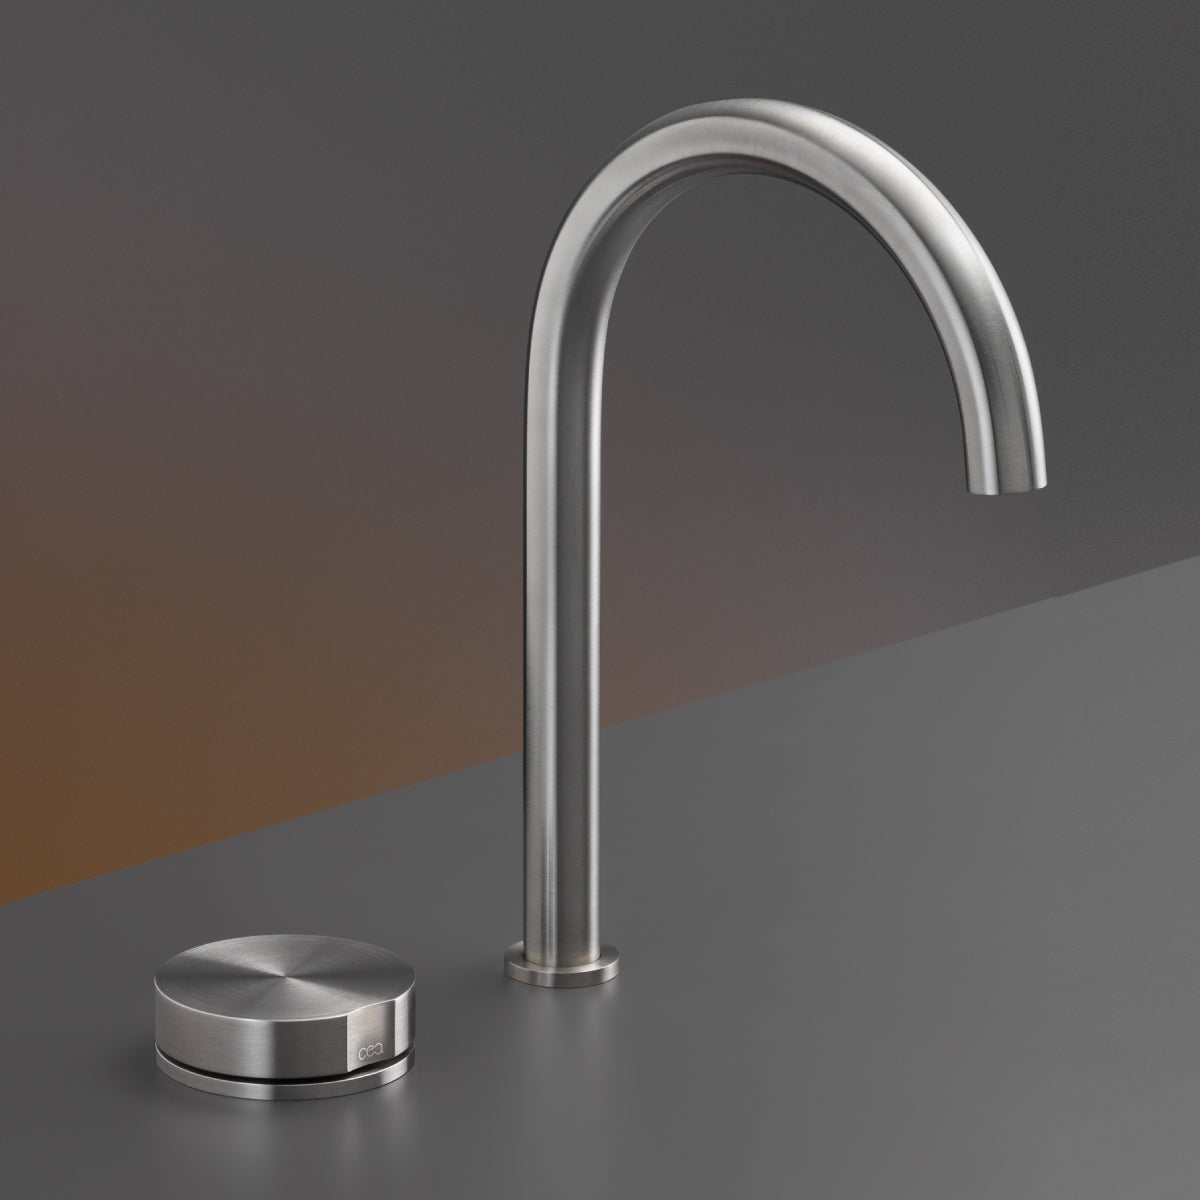 GIO21 I Faucet by CEA Design - $2,189.00 - $2,246.00